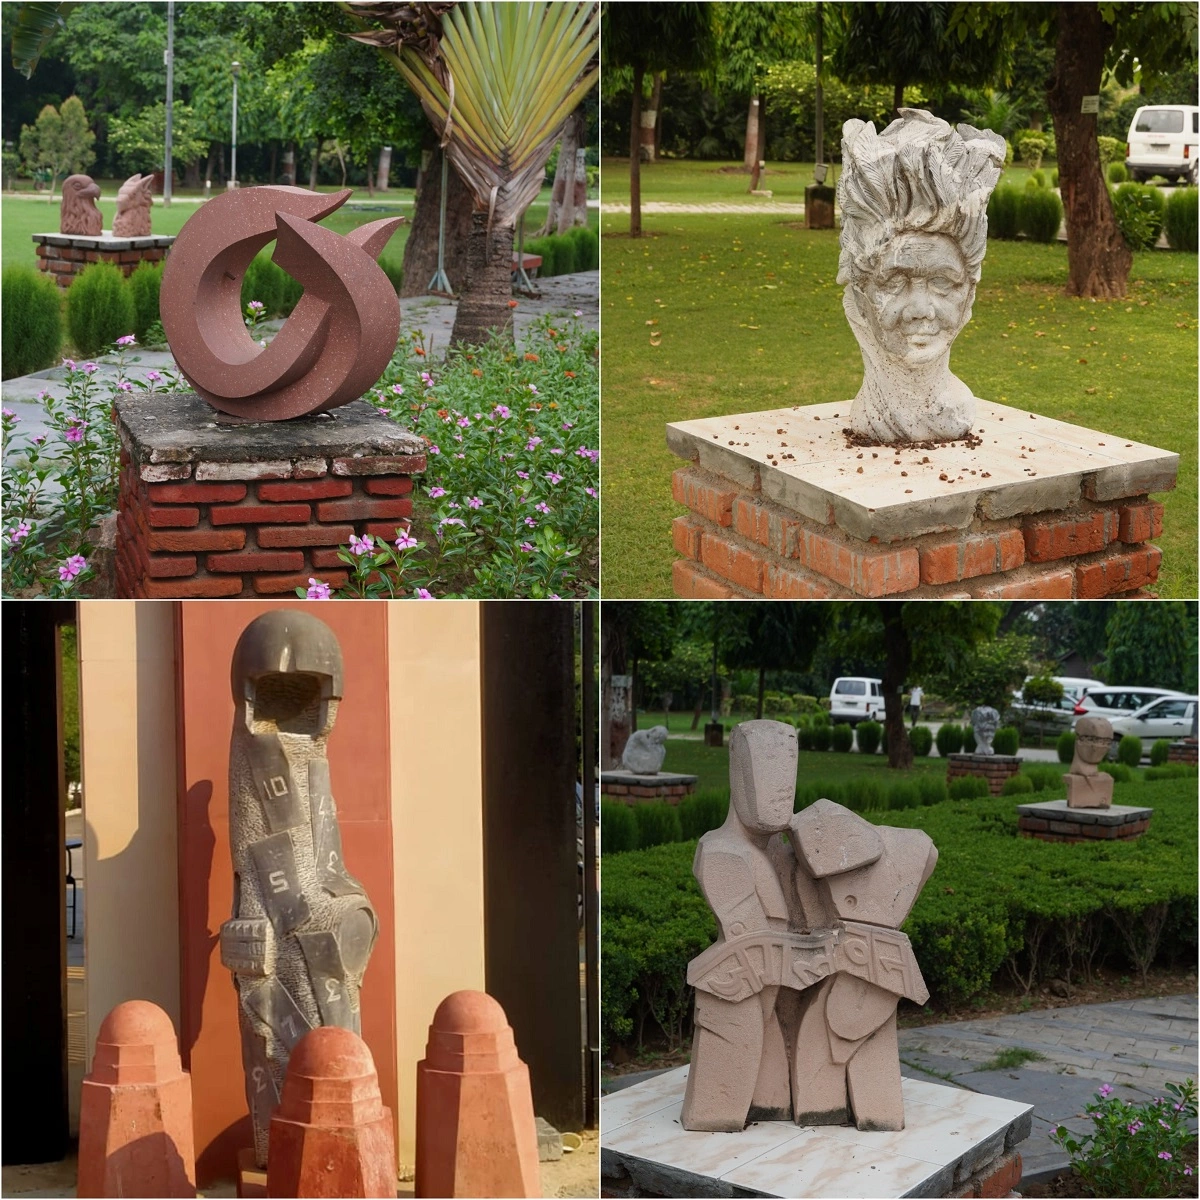 JMI Fine Art students and faculty: جامعہ ملیہ اسلامیہ کے فائن آرٹ کے طلبا نے مجسموں اور آرٹ ورک سے کیمپس کو نئی جہت عطا کی